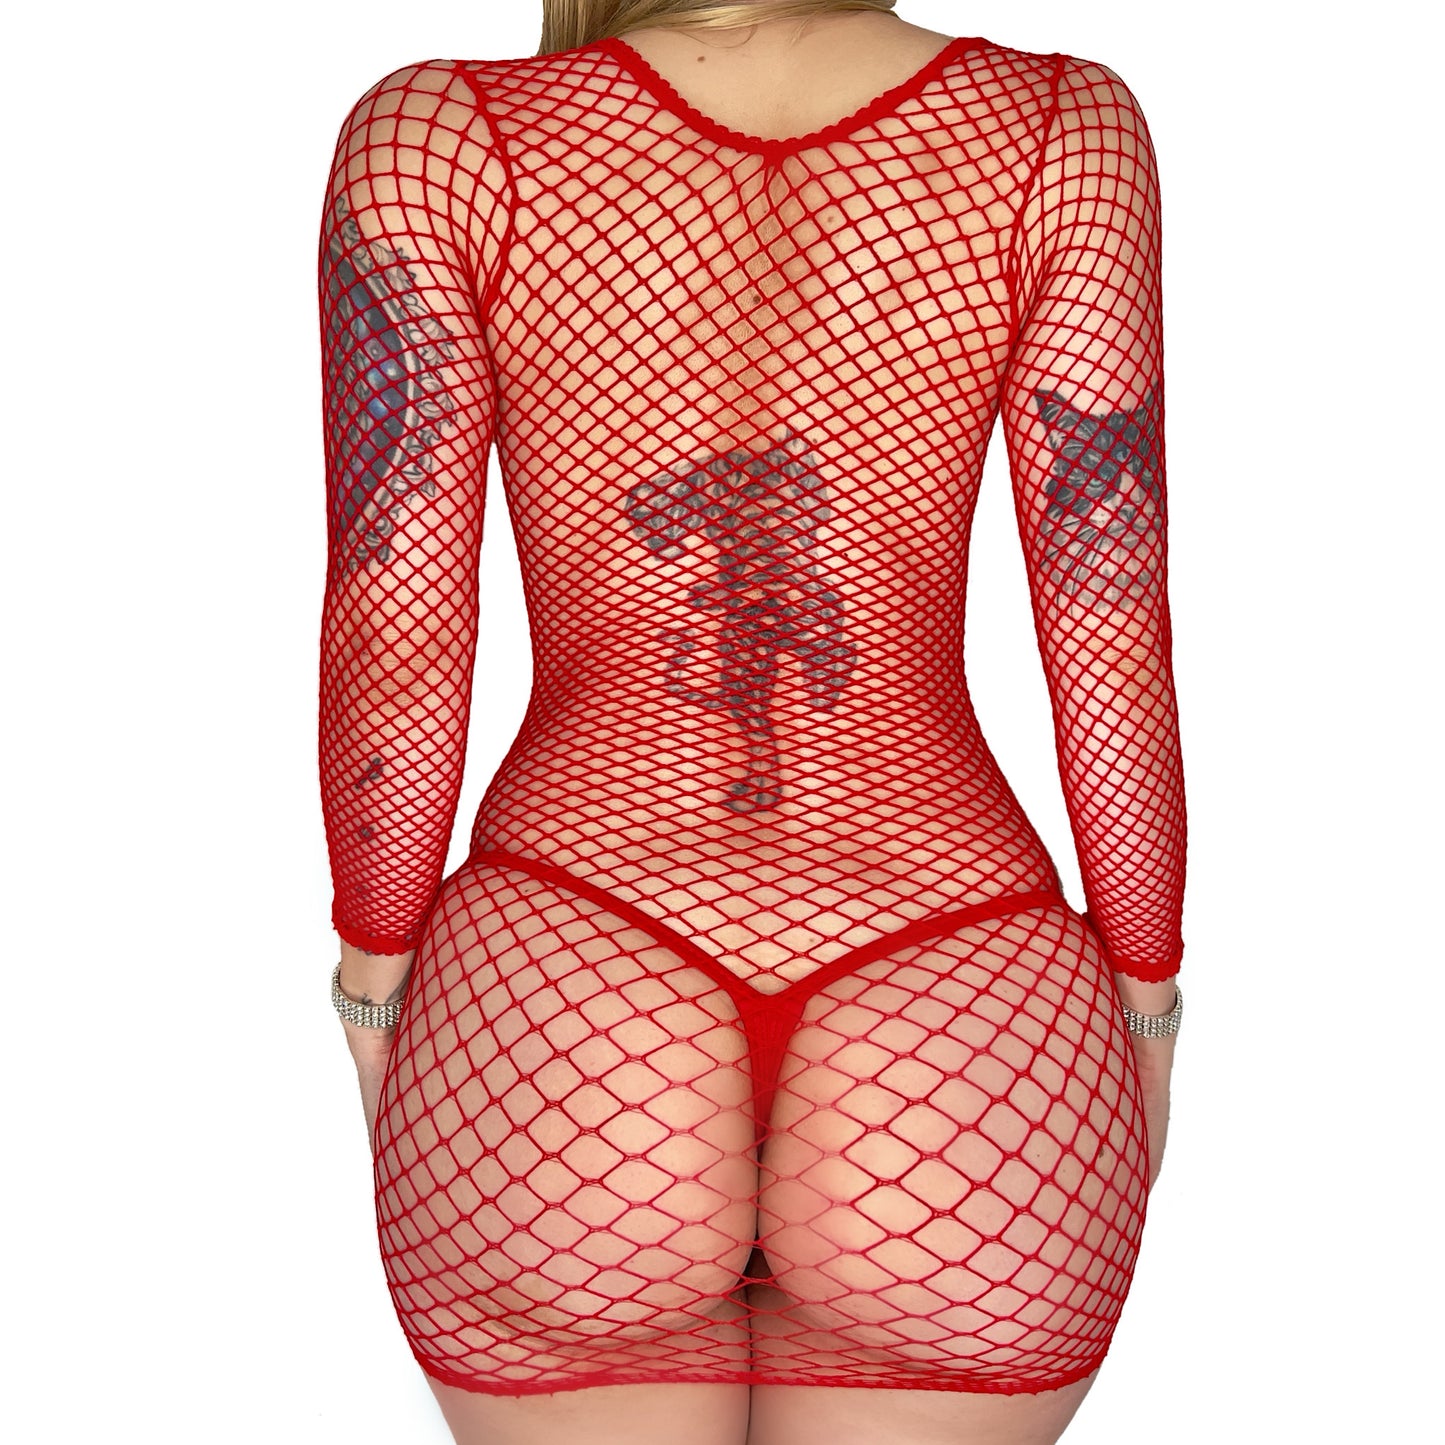 Crave You Fishnet Dress: Red